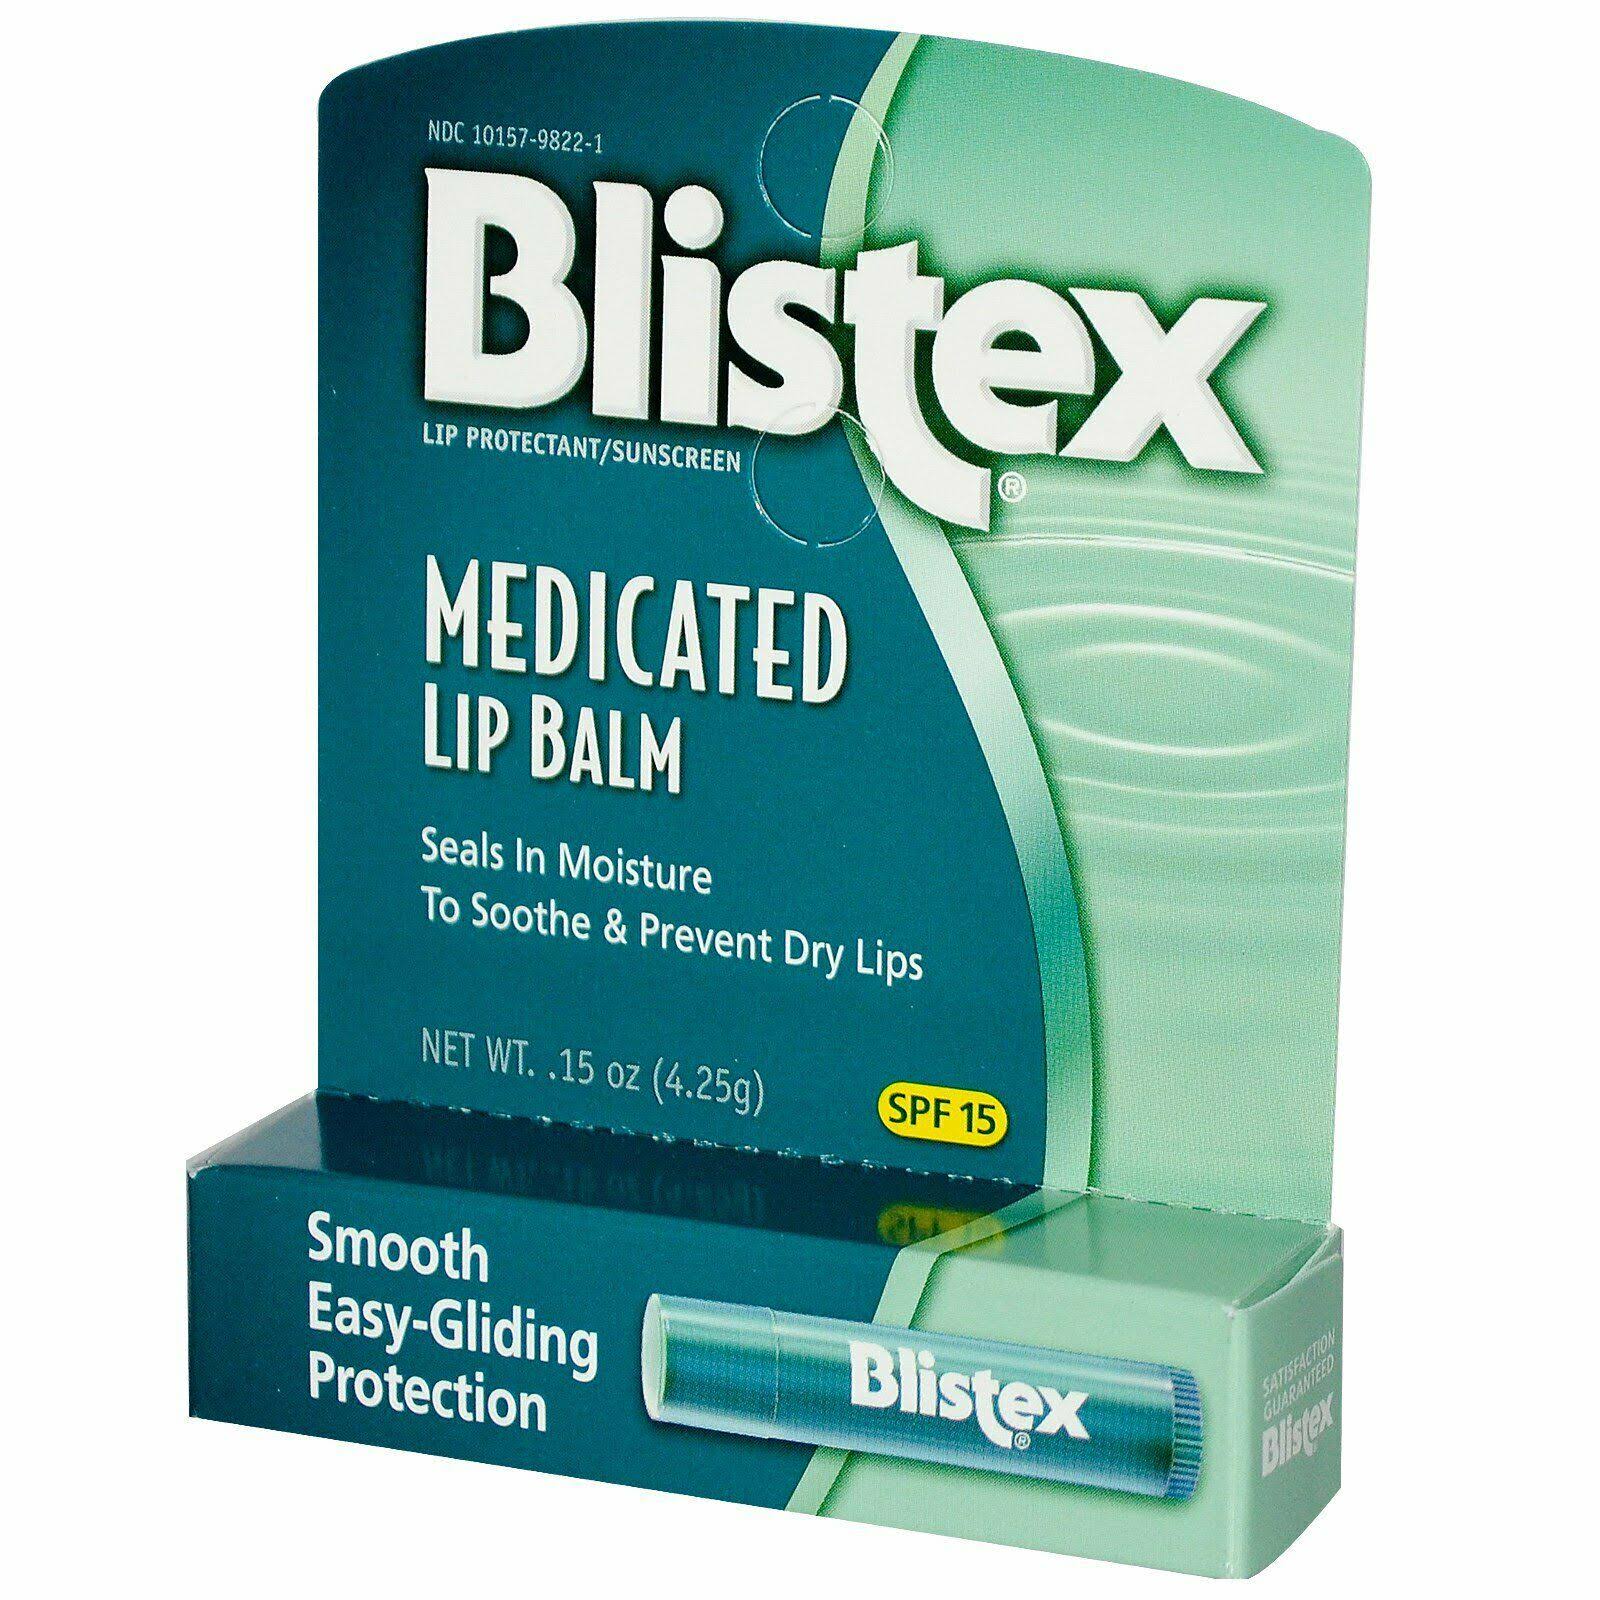 Blistex Medicated Lip Balm - SPF 15, 0.15oz